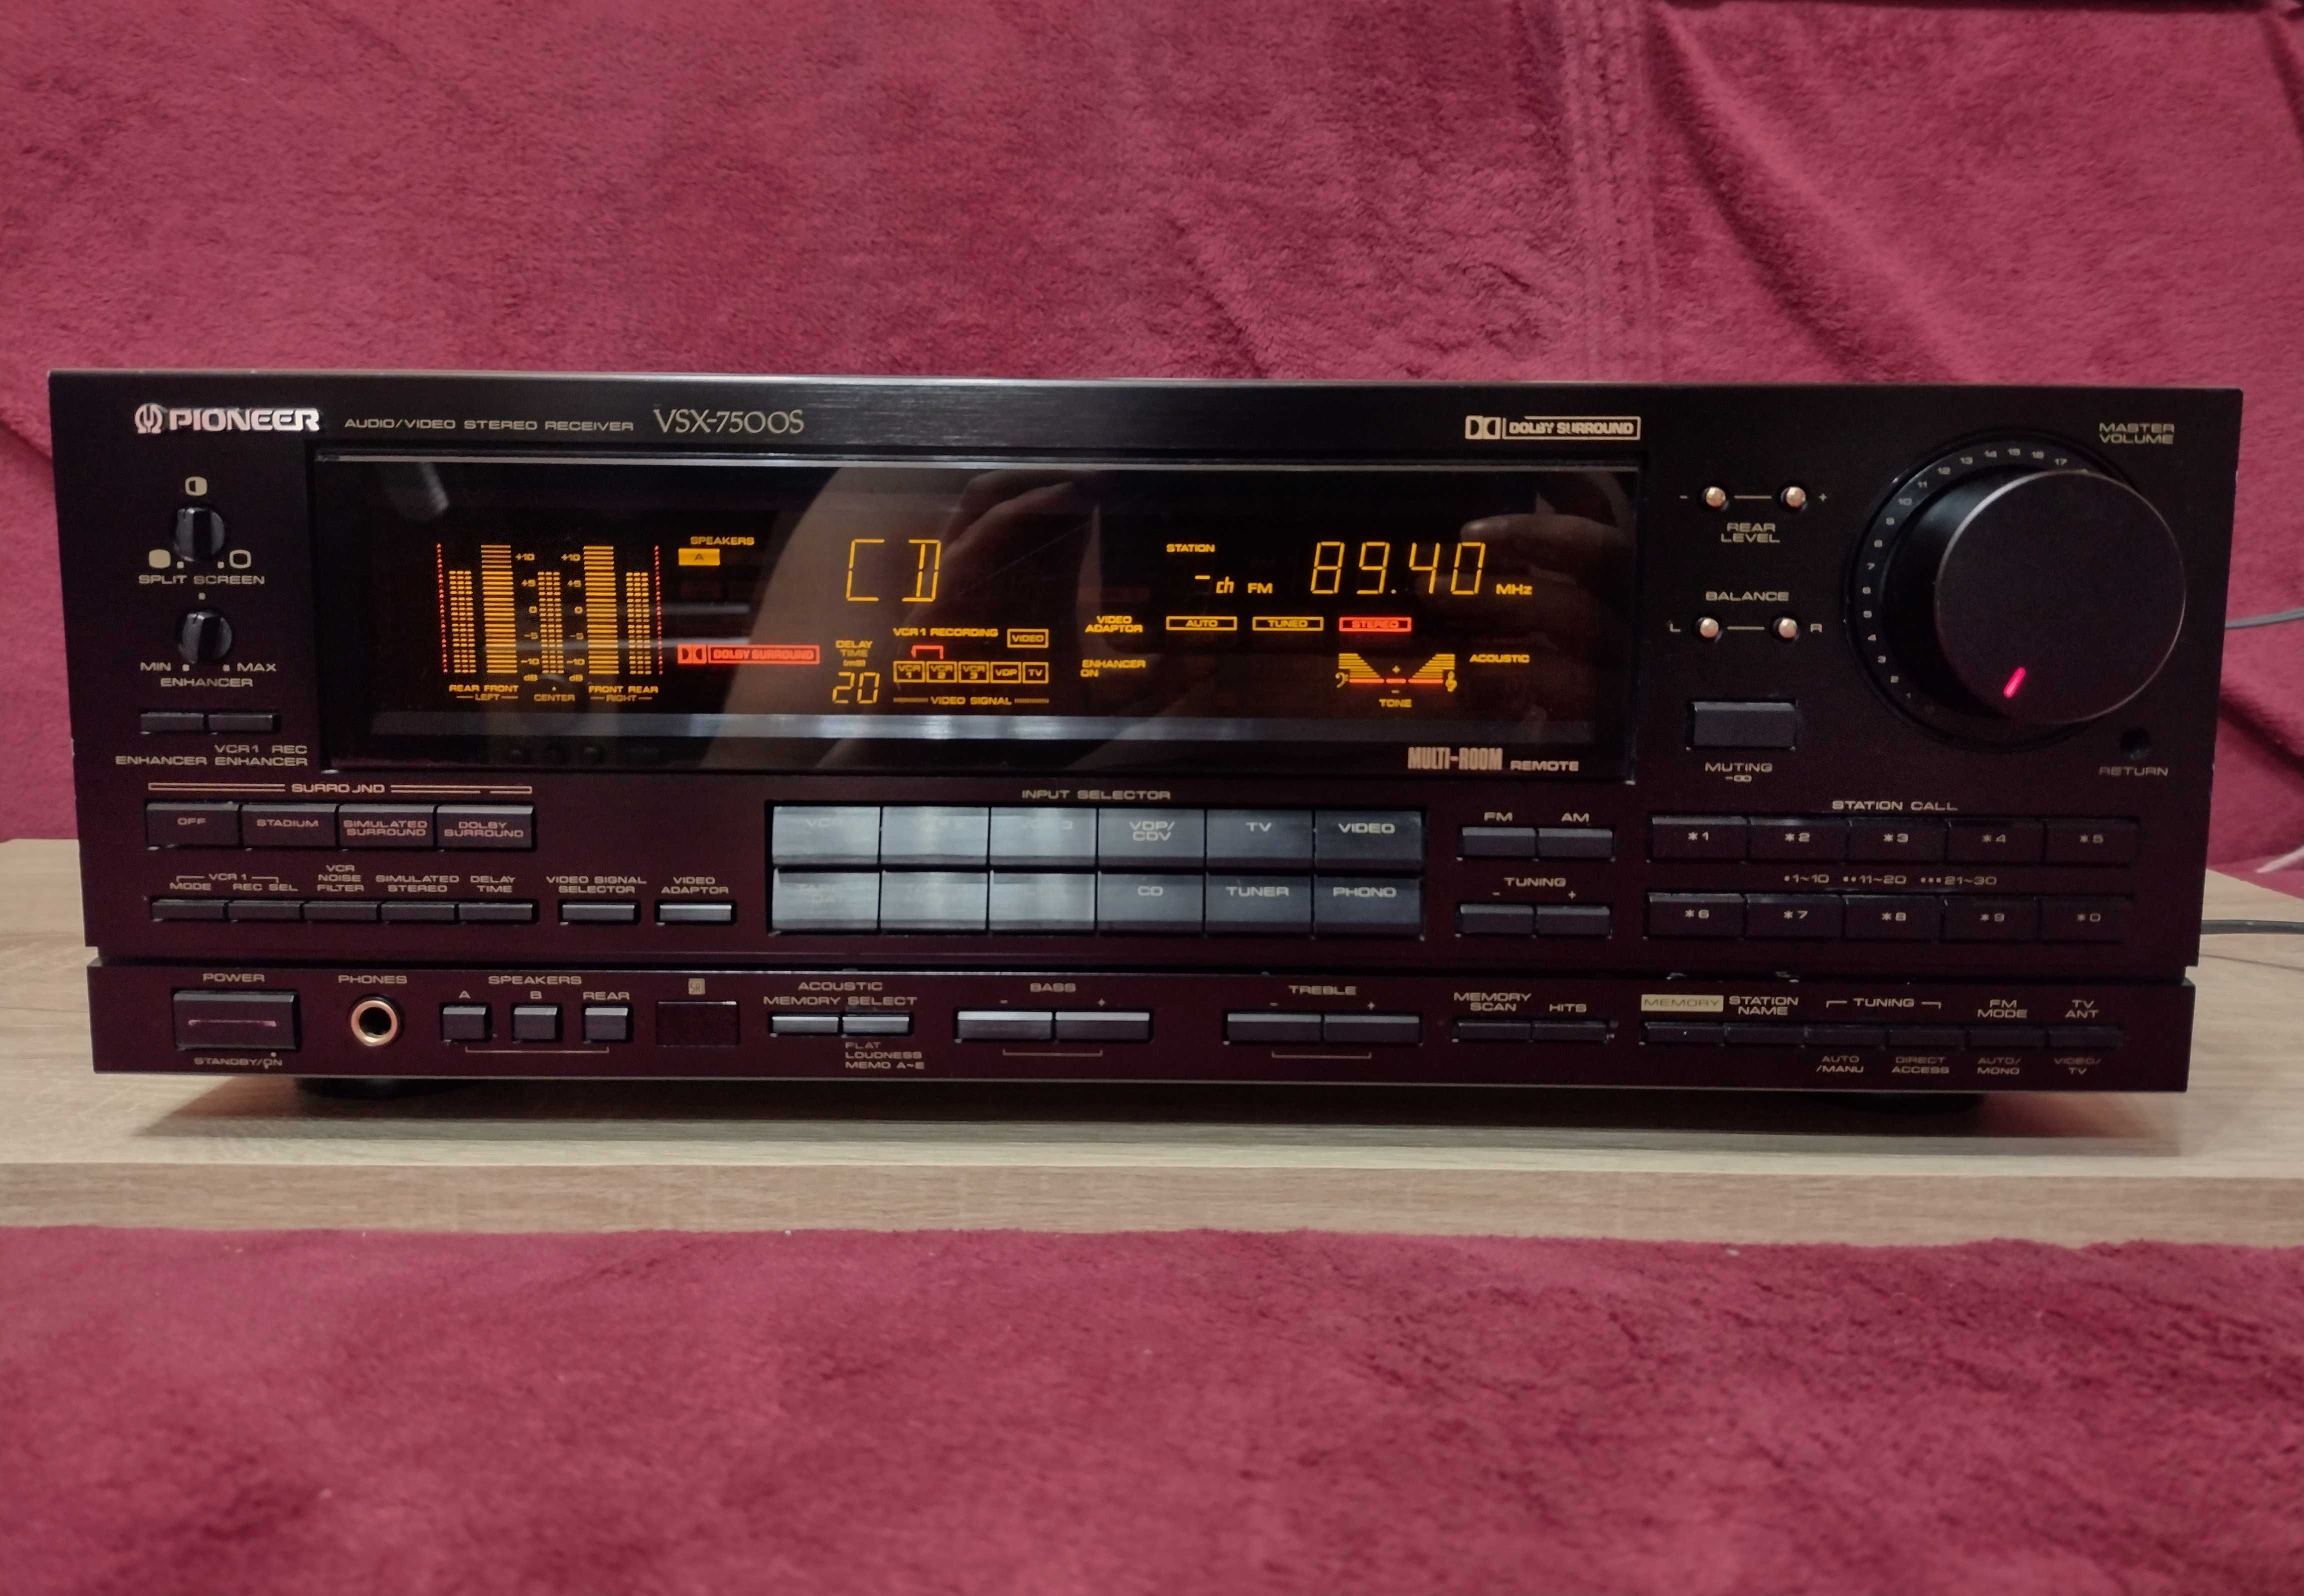 Pioneer VSX-7500S Audio Video Receiver